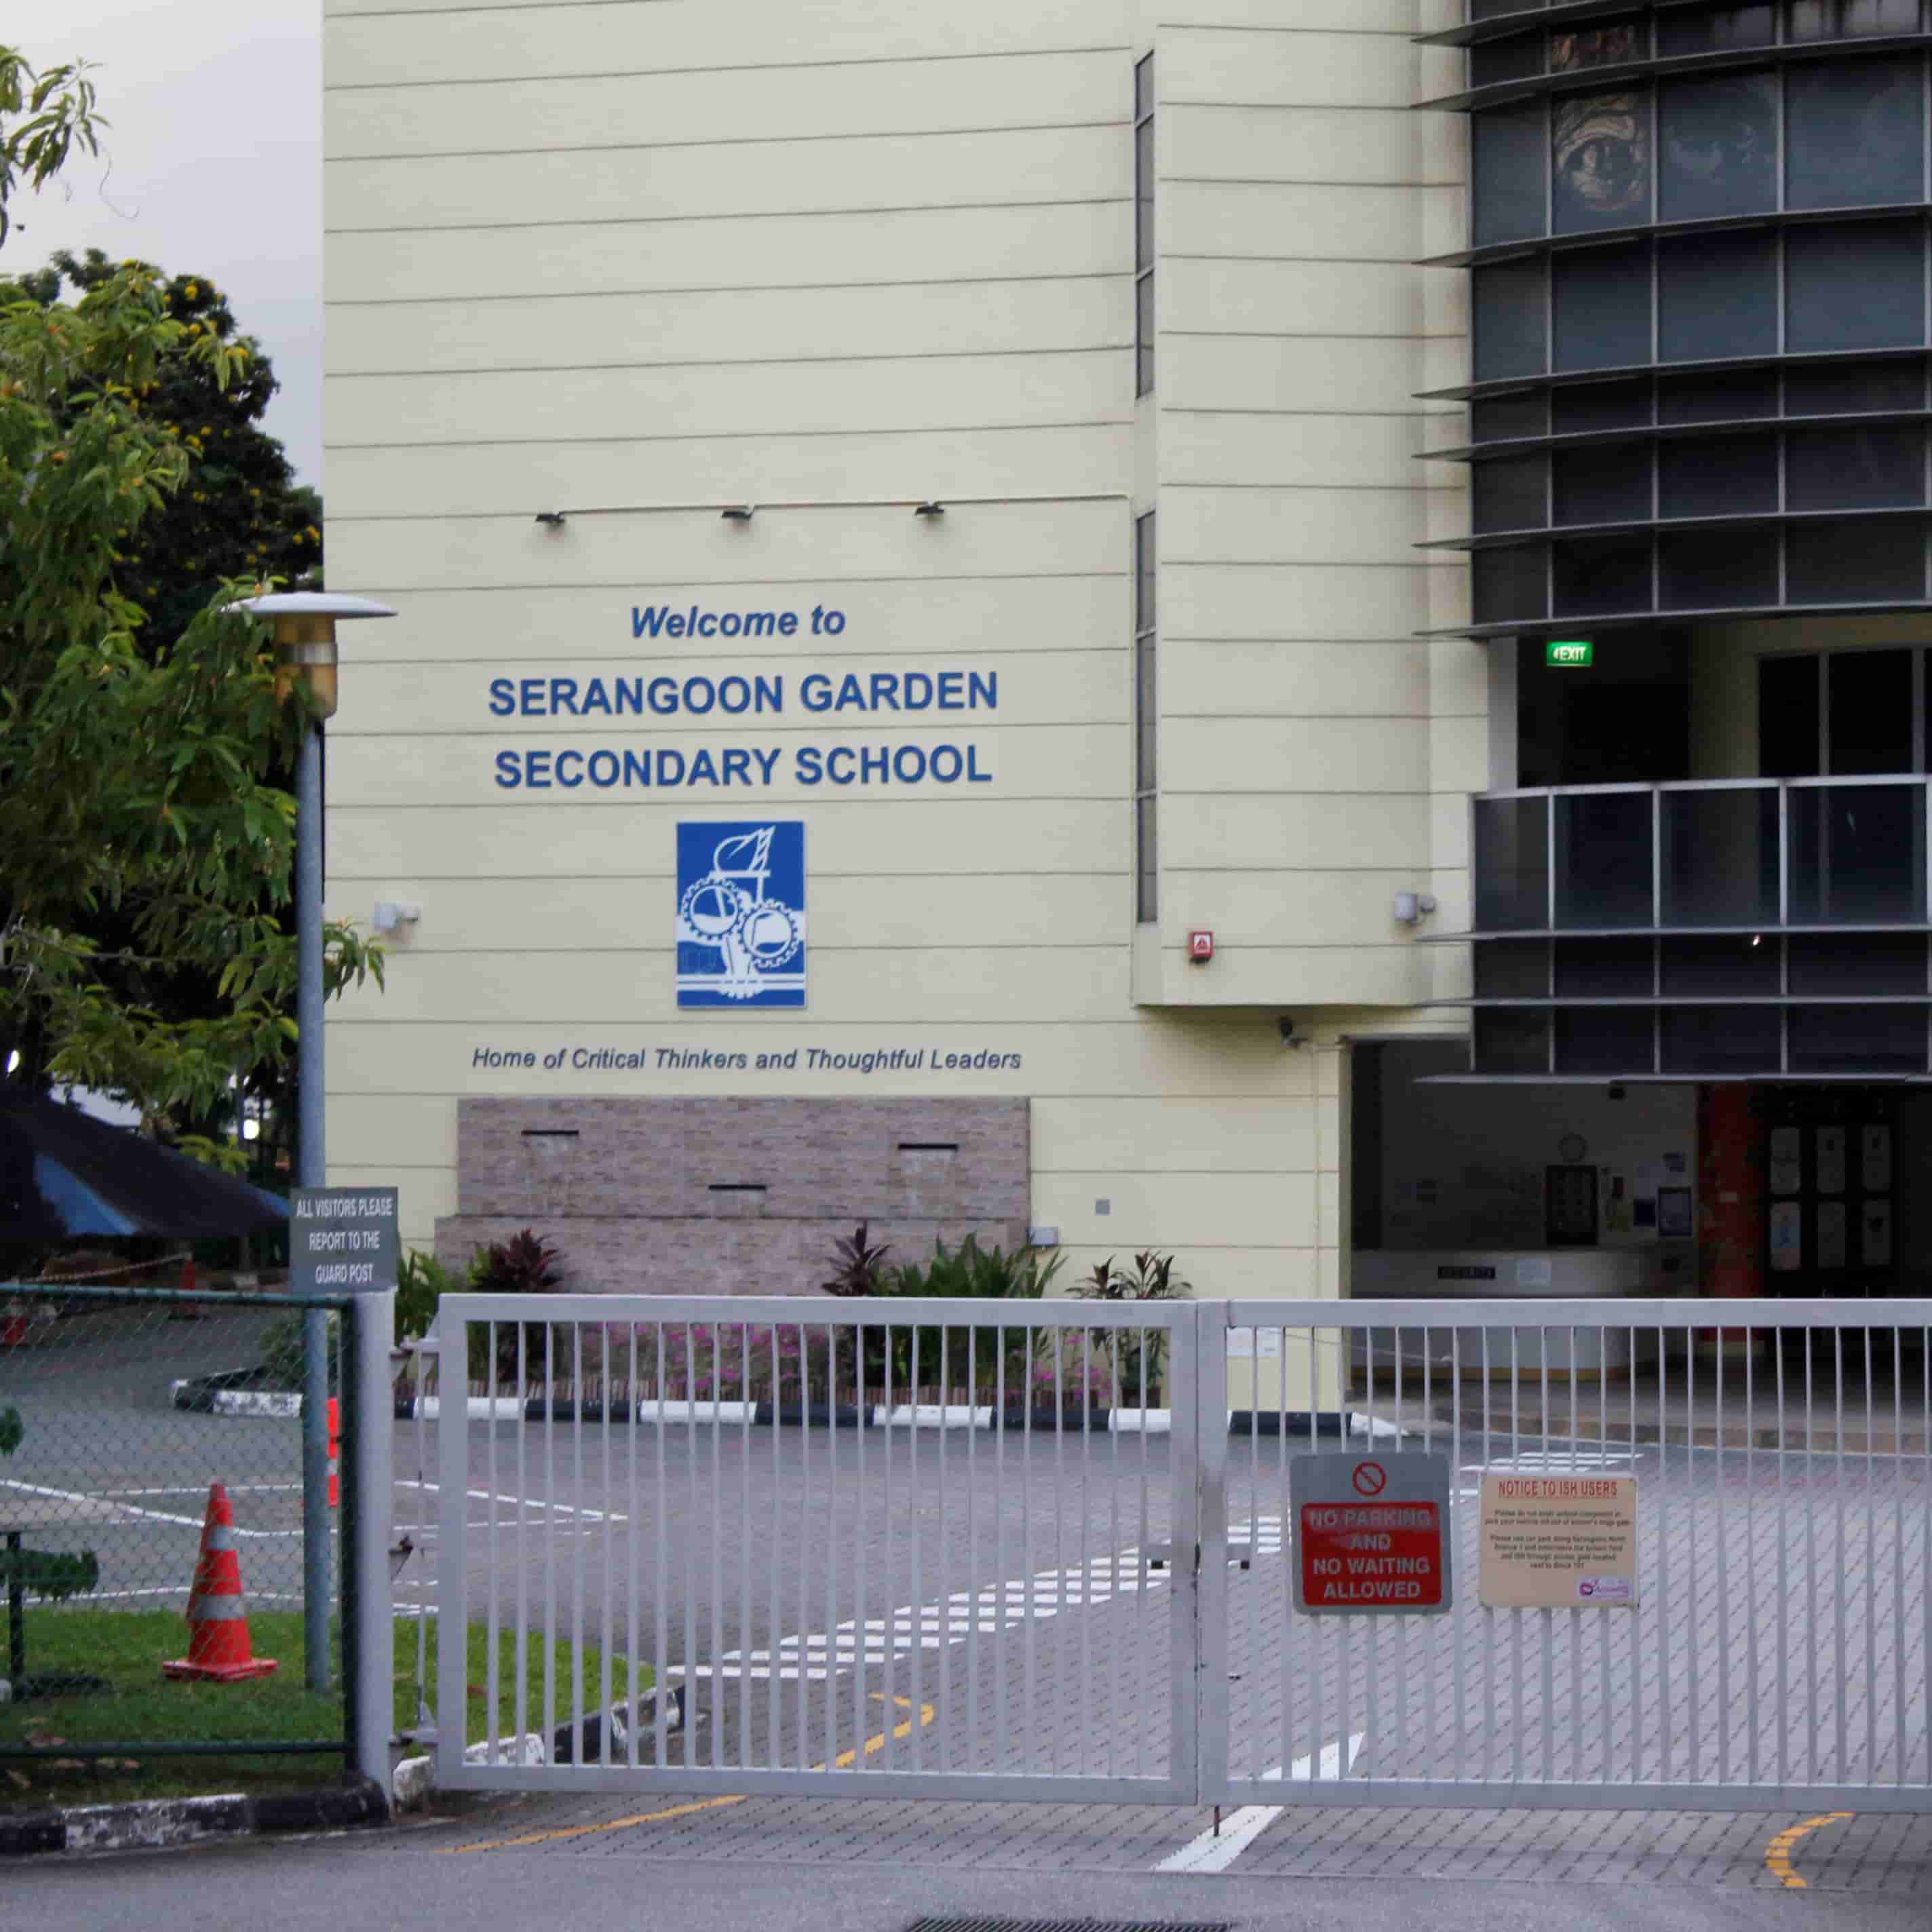 A picture of serangoon garden secondary school.